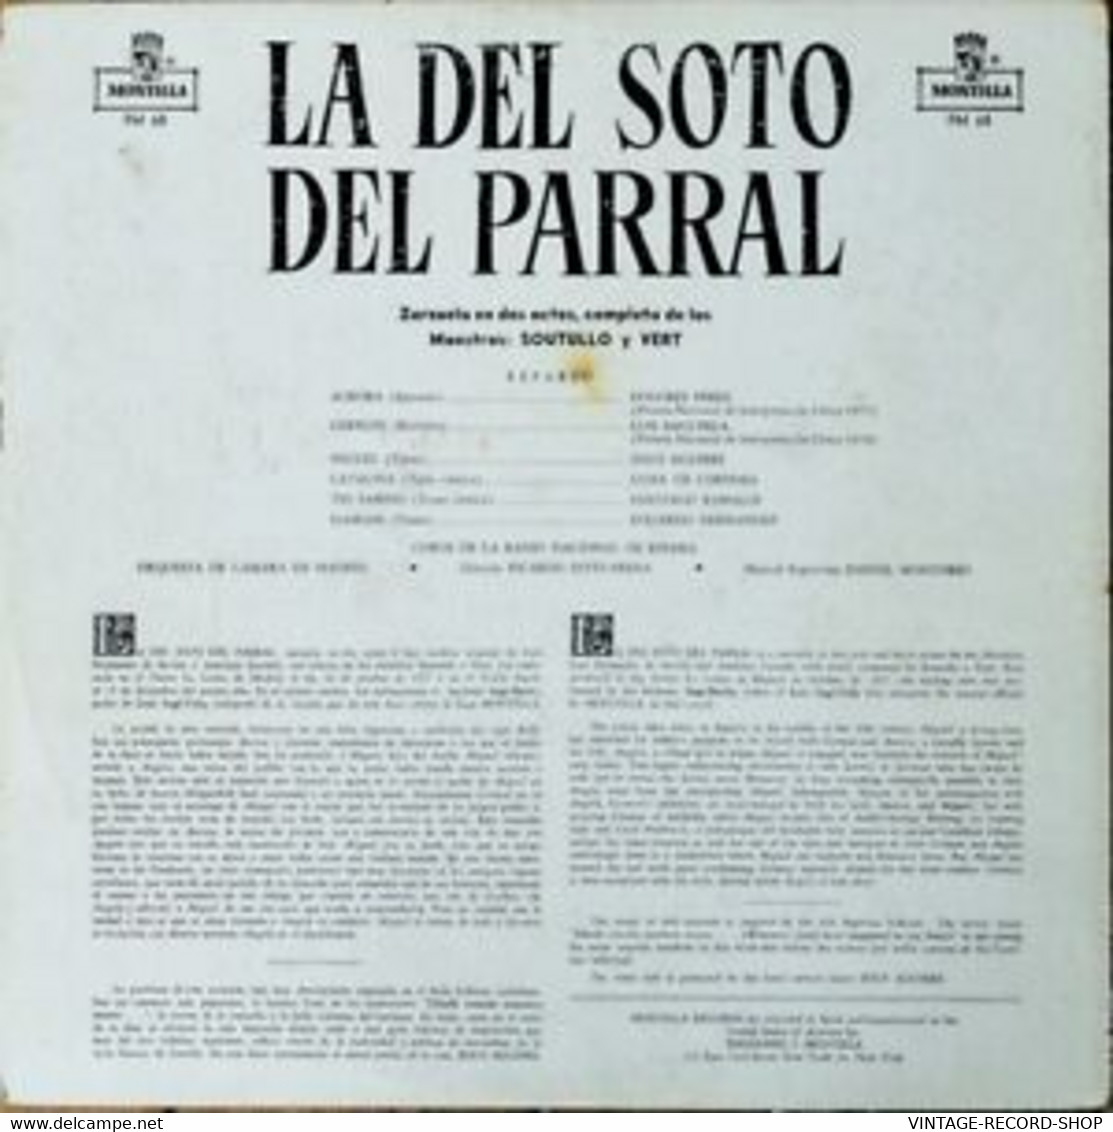 LA SOTO DEL PARRAL ZARZUELA BY SOUTULLO Y VERT- LUIS SAGI-VELA-DOLORES PEREZMONT - World Music